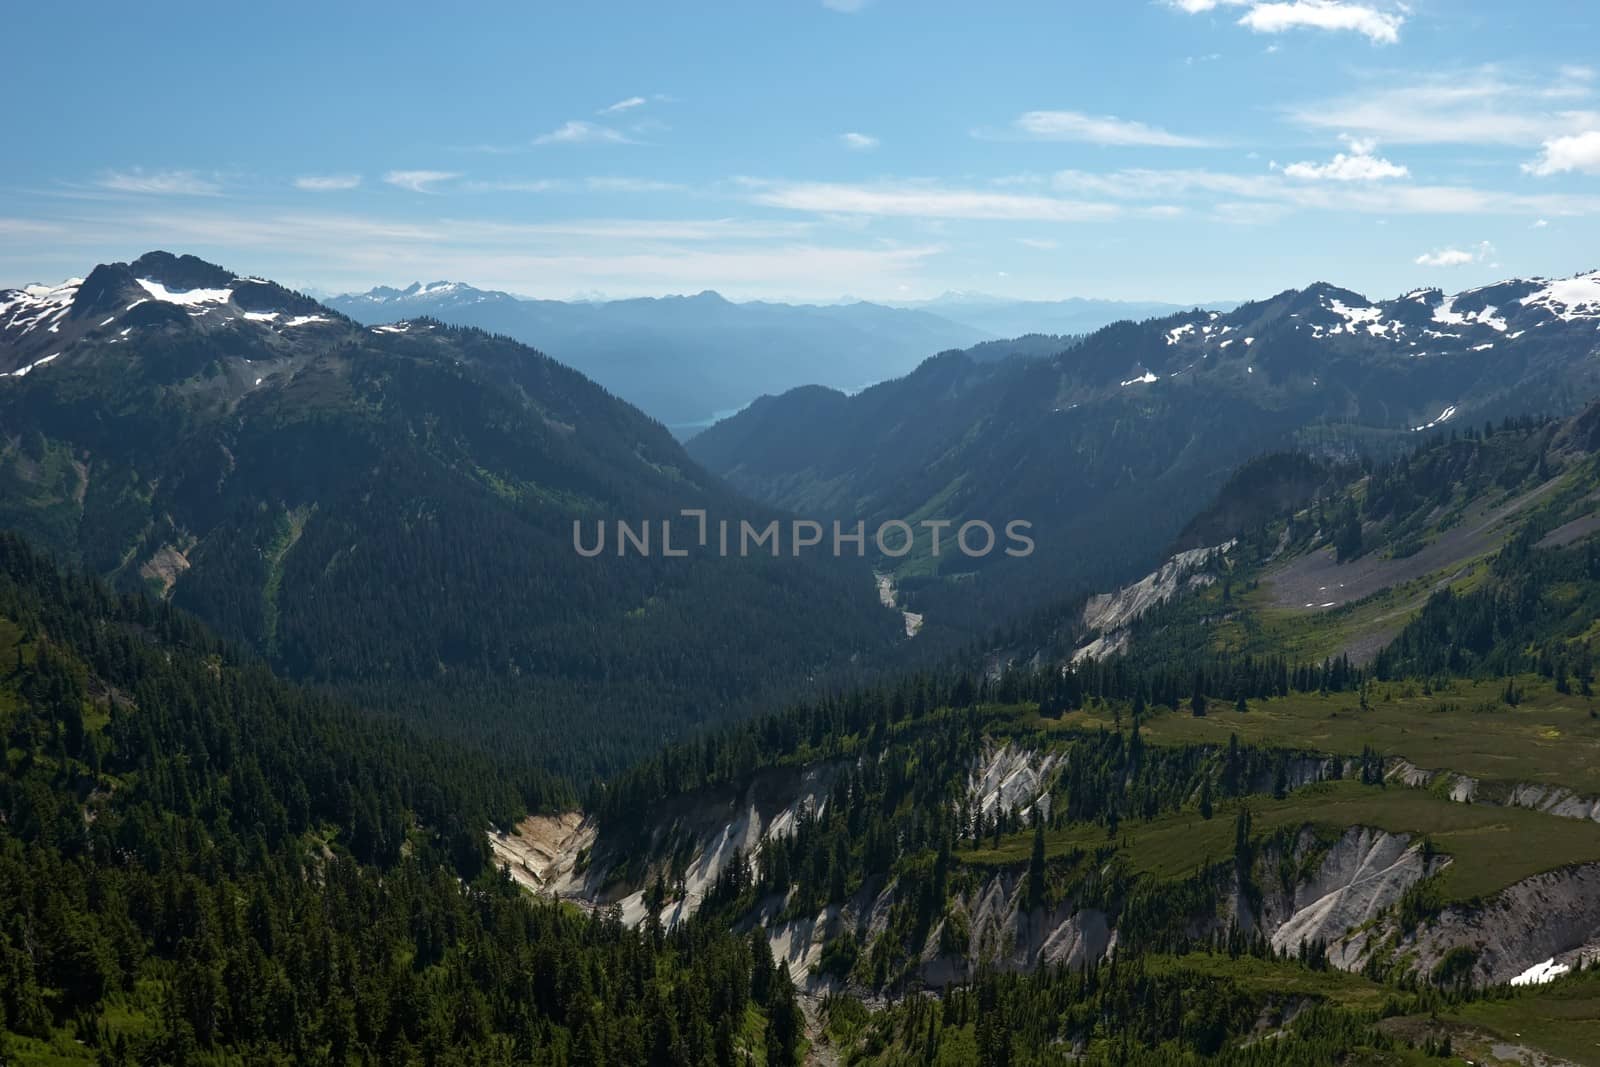 Mountain Landscape, Mt. Baker, Washington, USA